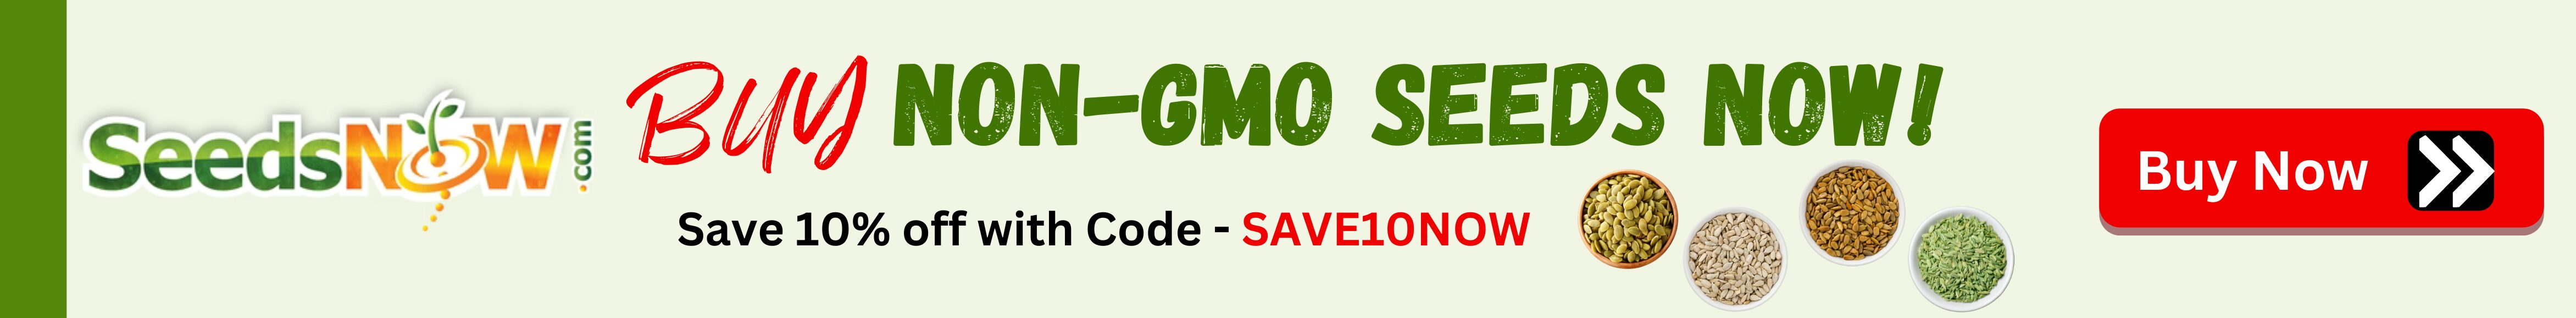 Buy NON-GMO Seeds NOW!